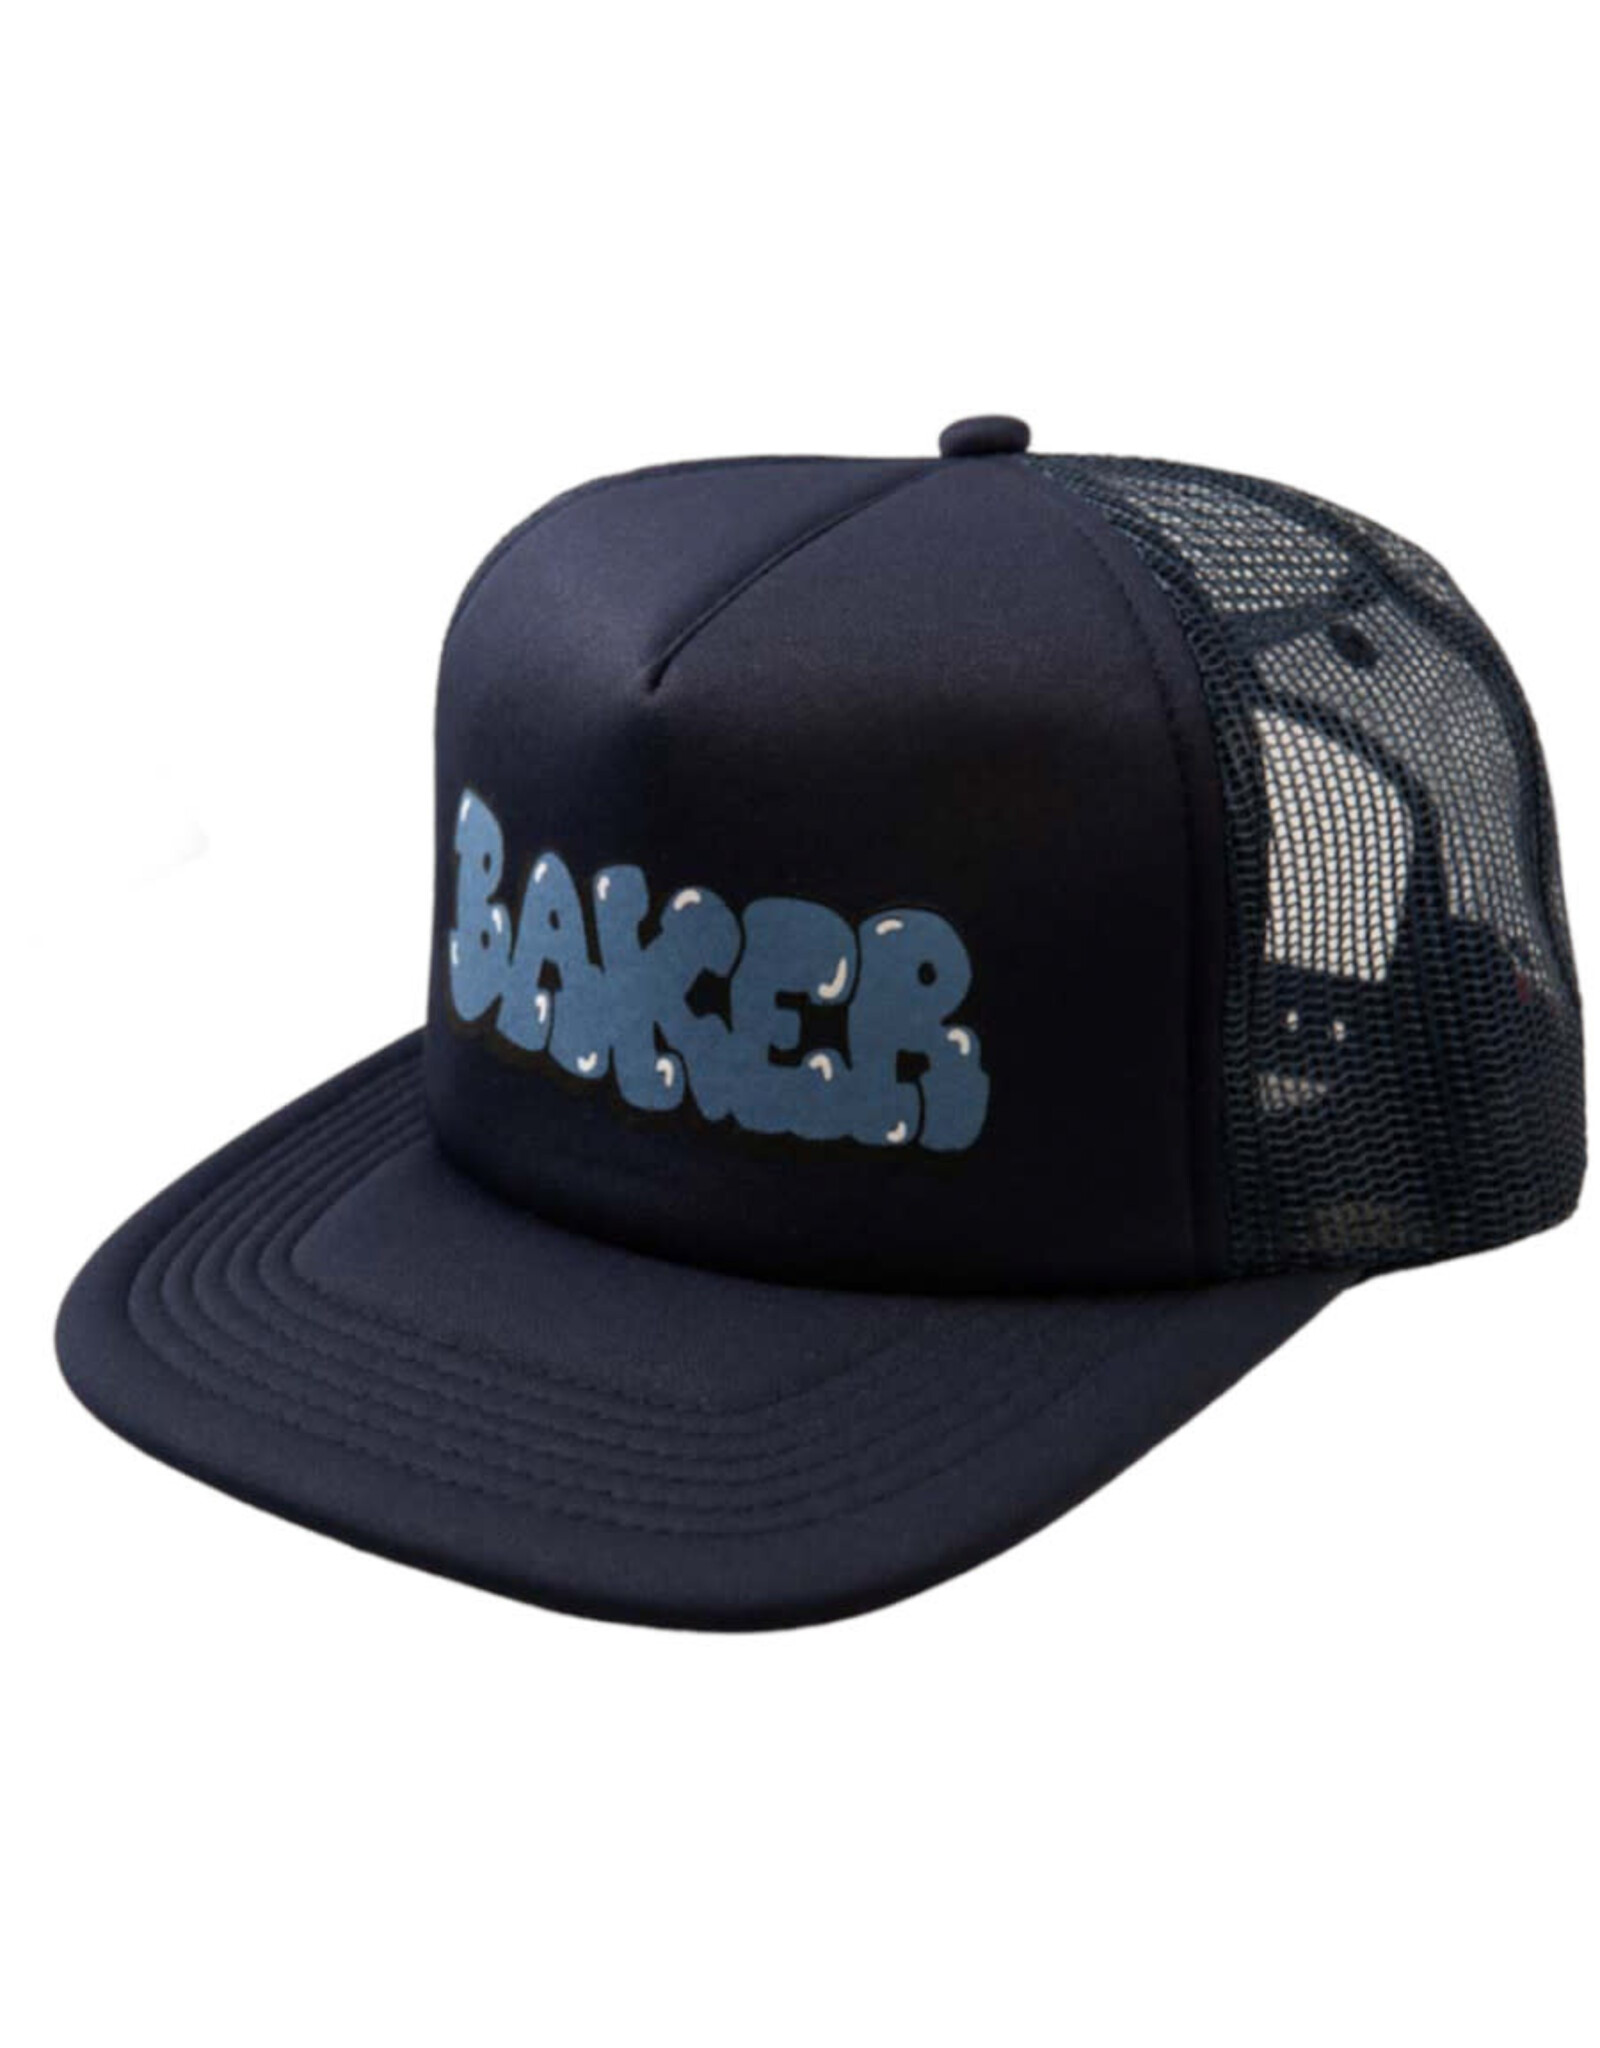 Baker Baker Hat Bubble Mesh Snapback (Navy)